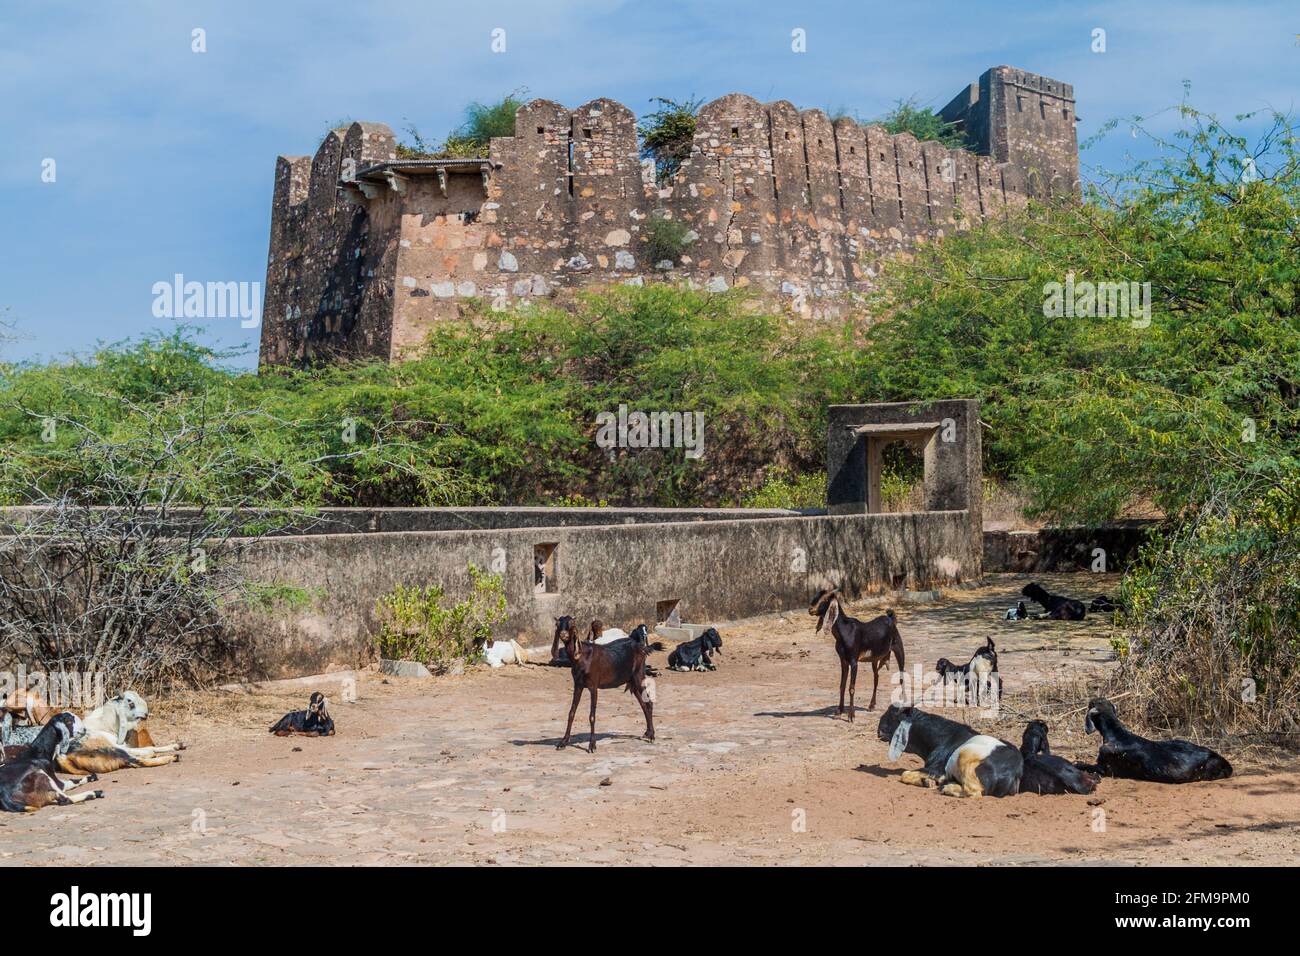 Ziegen bei Taragarh Fort in Bundi, Rajasthan Staat, Indien Stockfoto